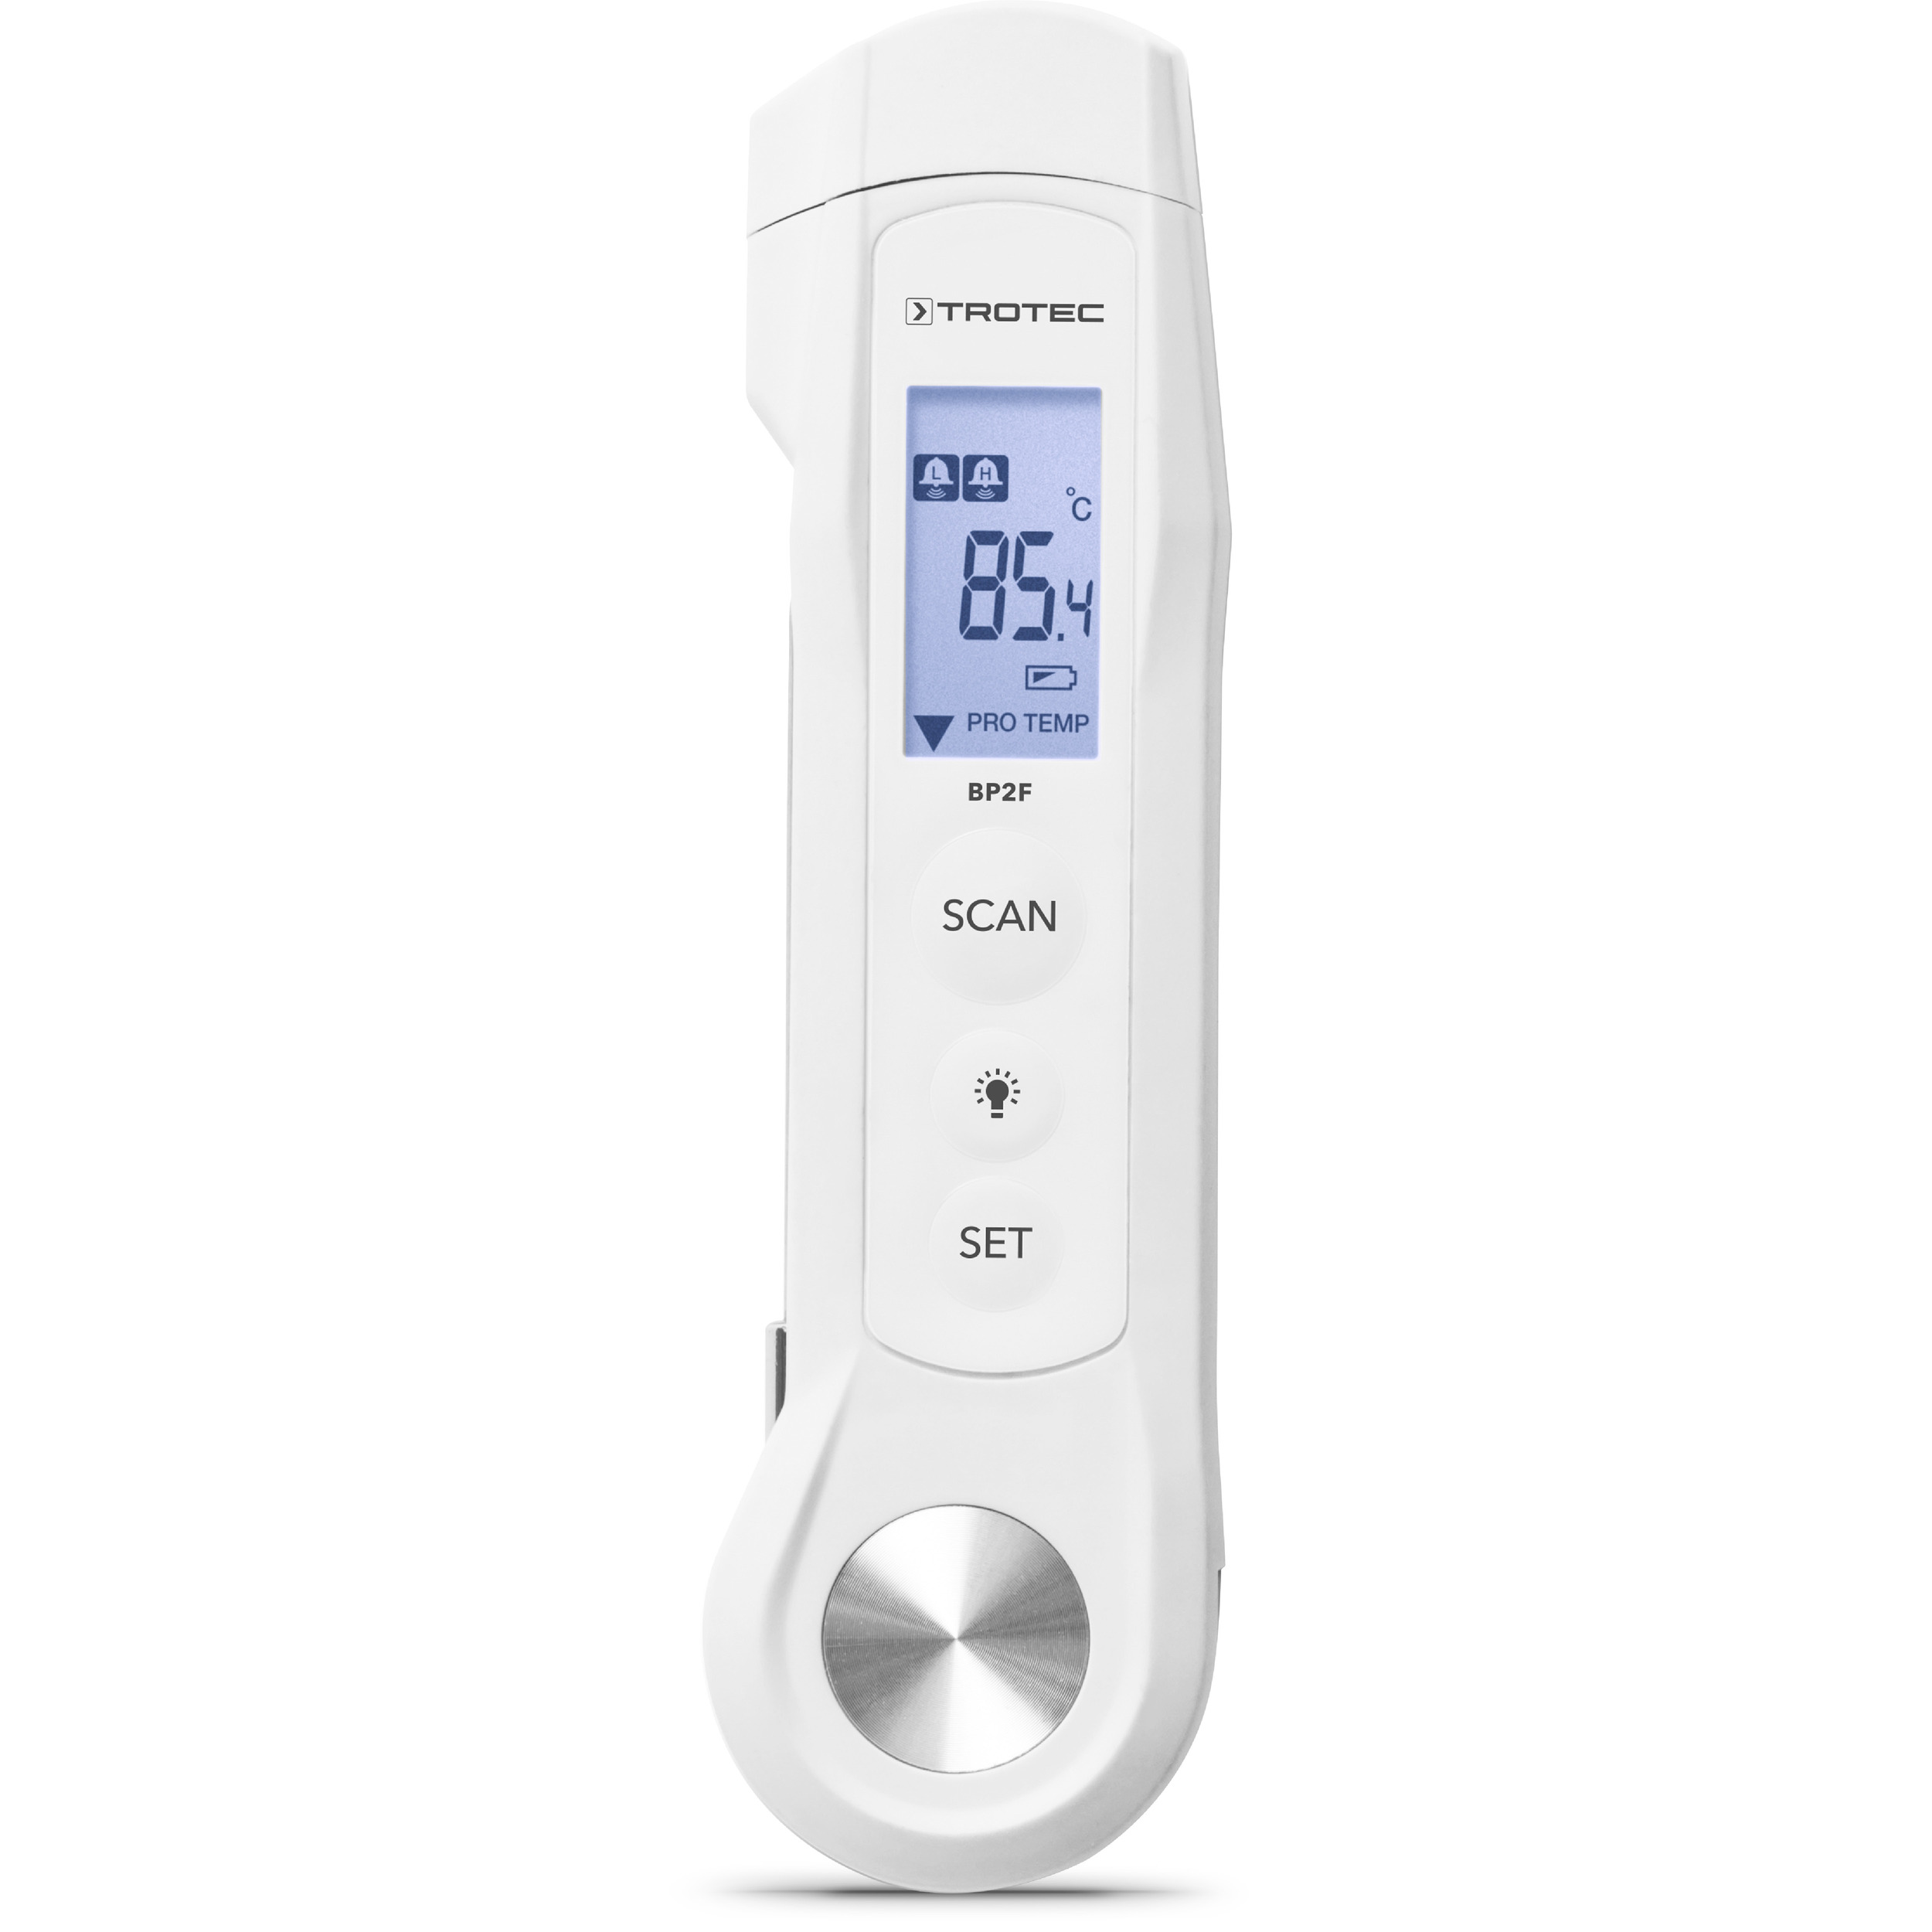 Lebensmittel-Thermometer BP2F